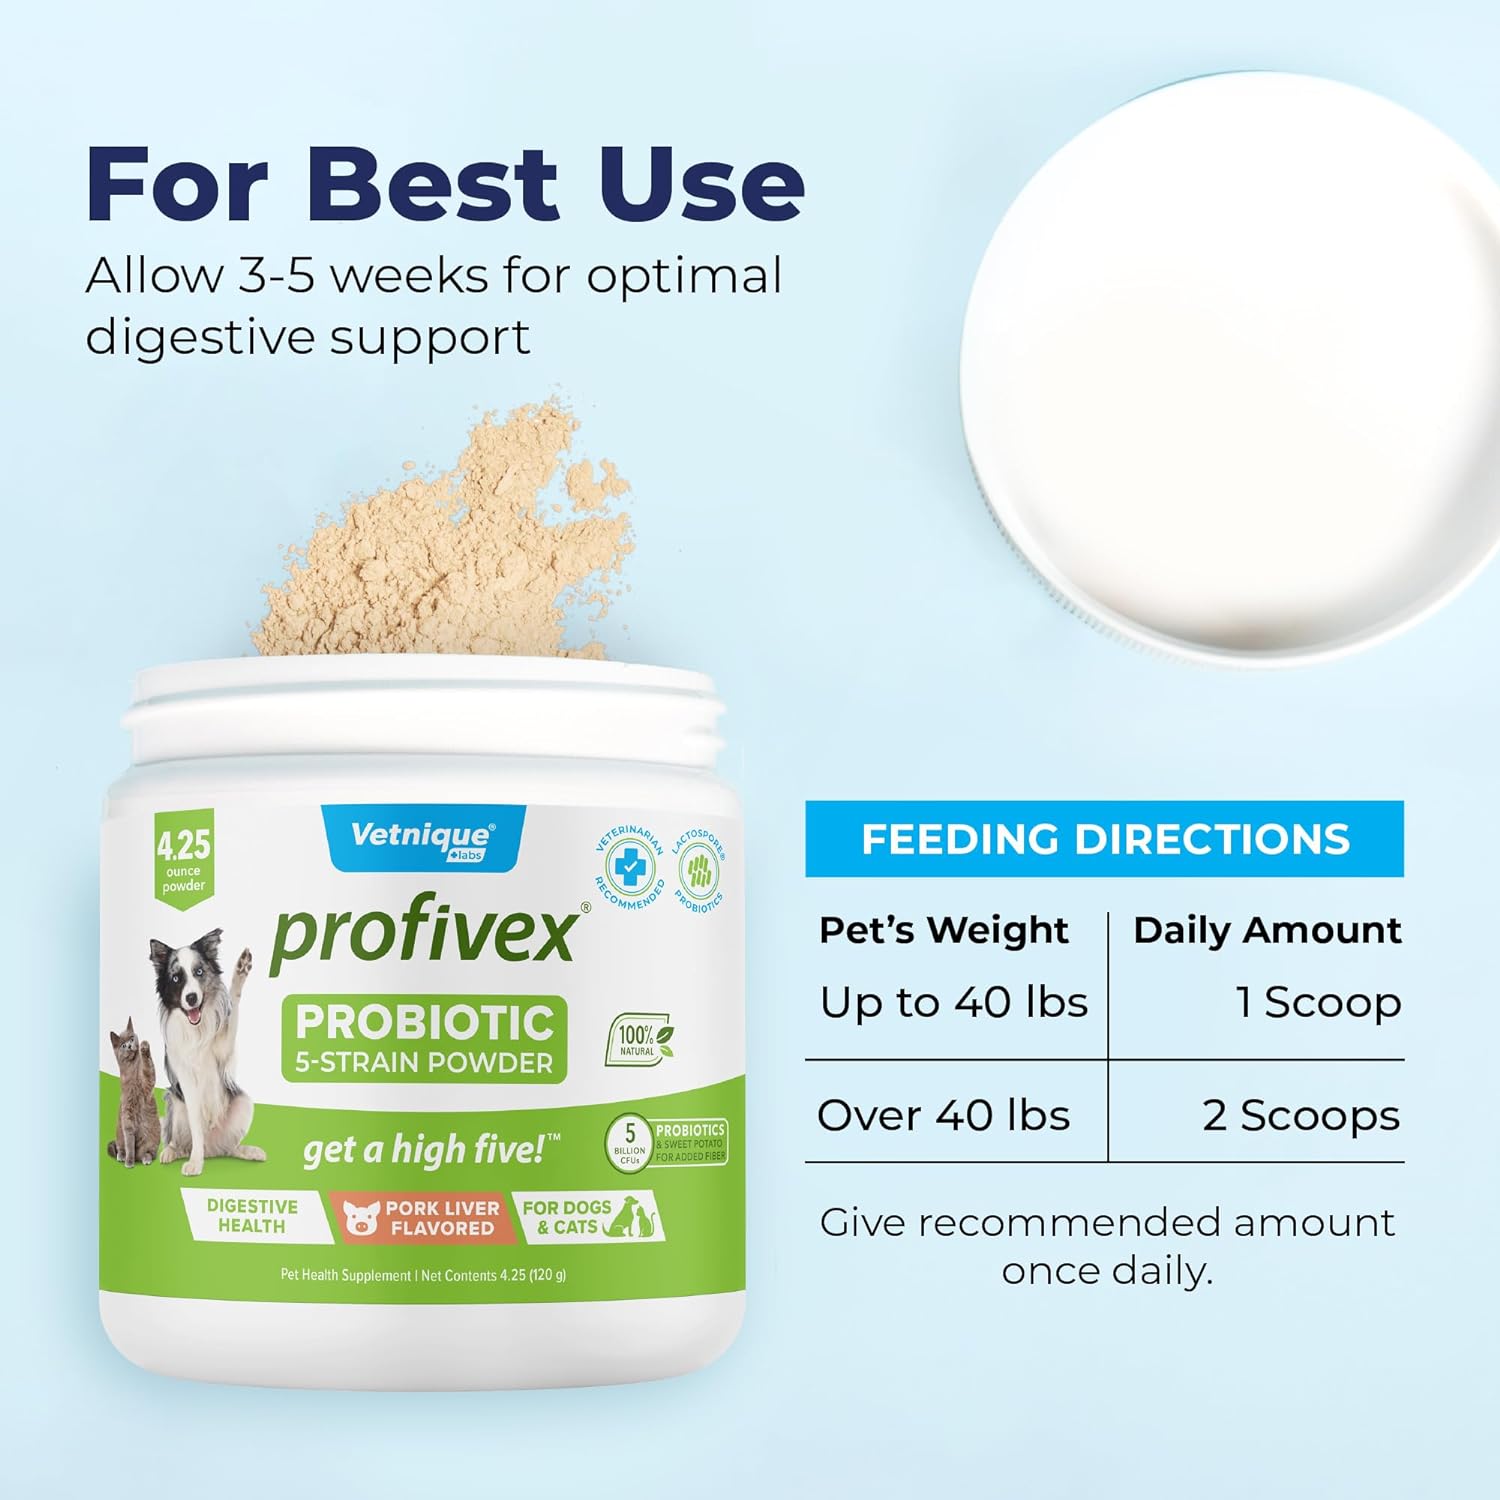 Vetnique Labs Profivex Probiotics for Dogs All Natural Dog Chews & Powder for Digestive Health Probiotic Supplements for Dogs 5 Strains of Probiotics & Prebiotics (Powder, 4.25oz) : Pet Supplies